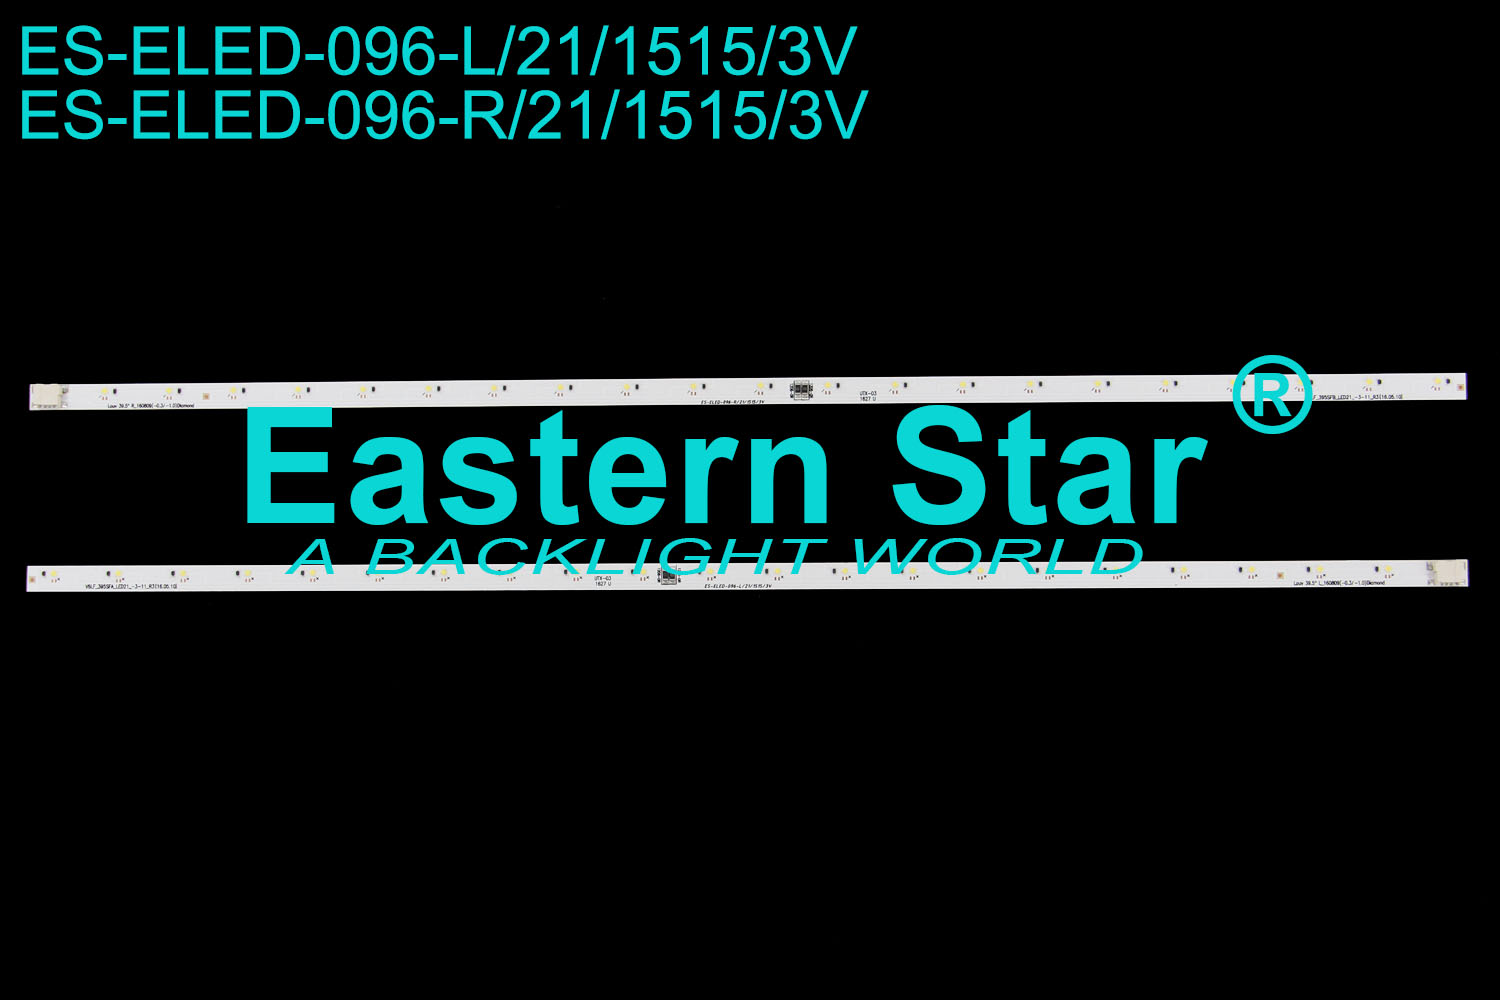 ES-ELED-096 ELED/EDGE TV backlight 39.5'' Lourve 39.5" L_160829(-0.3/-0.1) Diamond V6LF_395SFA_LED21_-3-11_R3(16.05.10)  Lourve 39.5" R_160829(-0.3/-0.1) Diamond V6LF_395SFB_LED21_-3-11_R3(16.05.10)